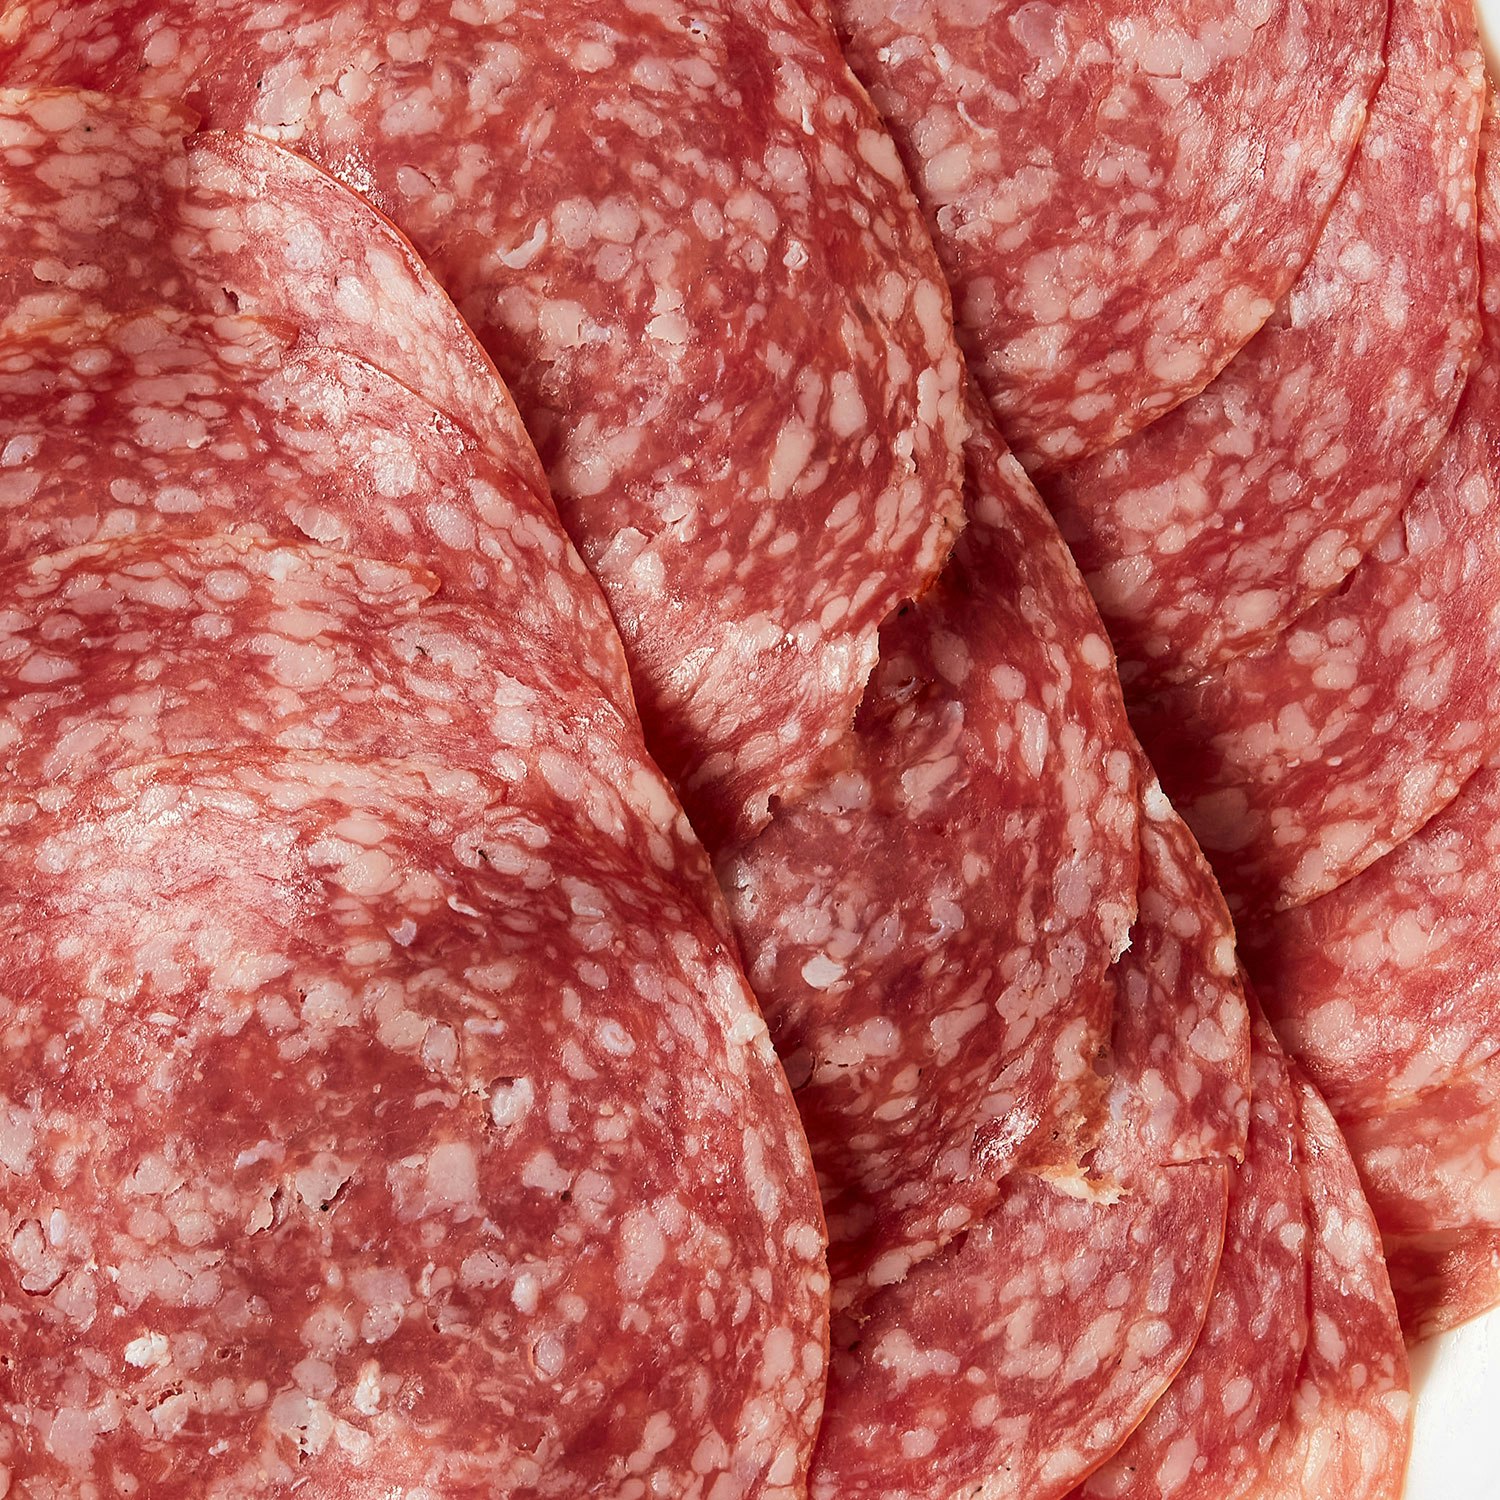 Rovagnati Sliced Salame Milano meats